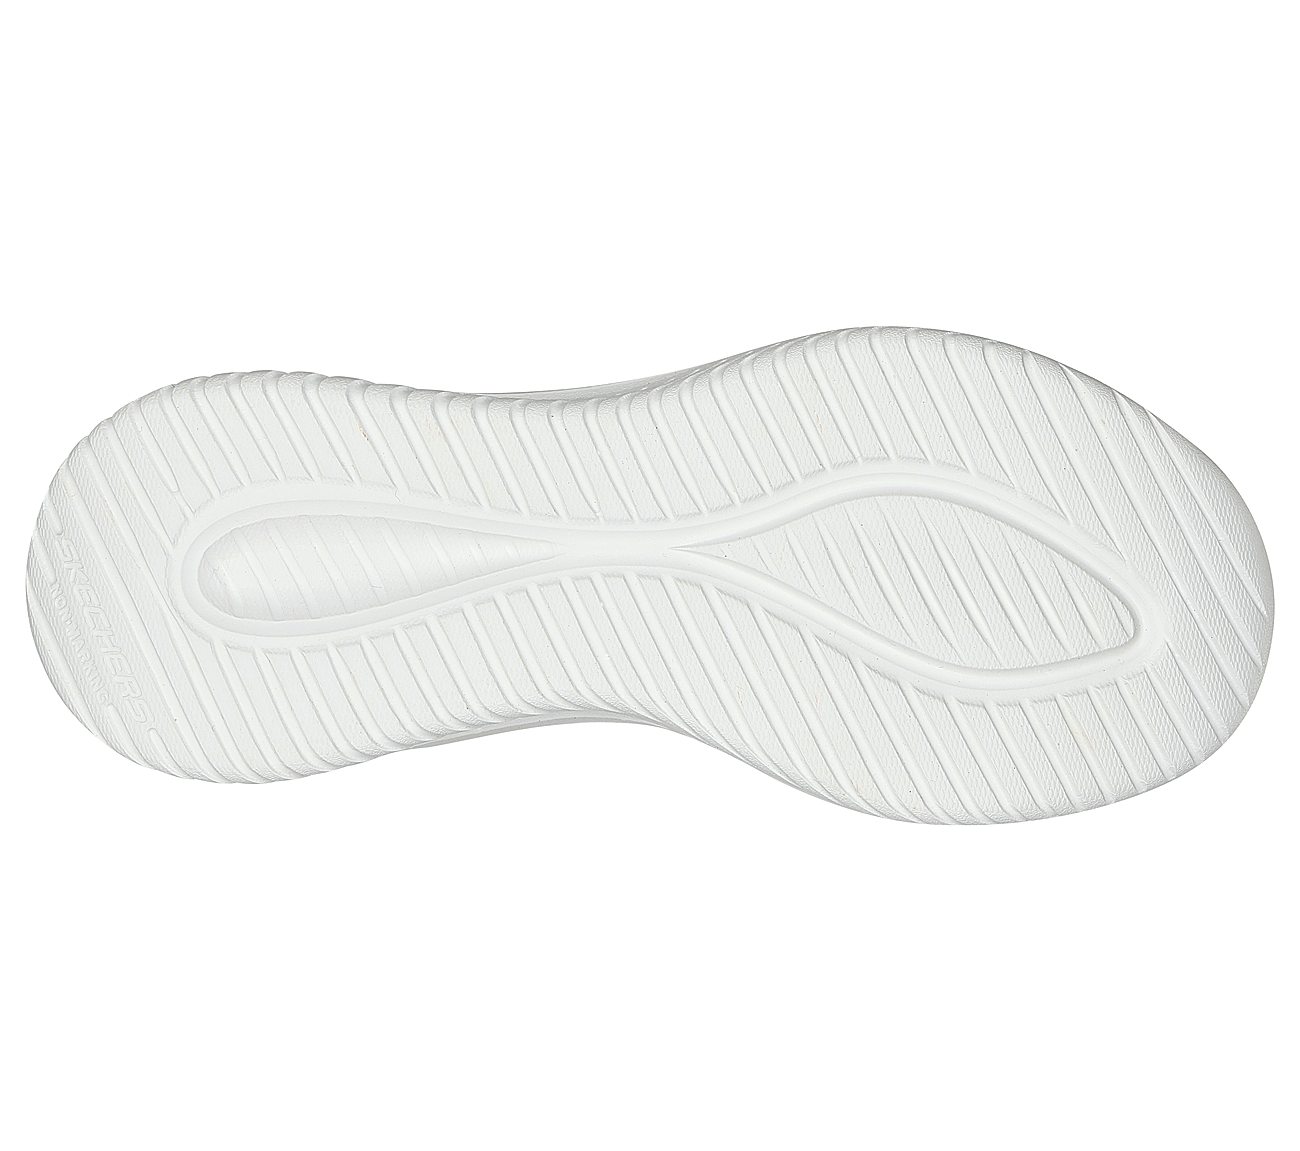 ULTRA FLEX 3.0 - SMOOTH STEP, BLACK/WHITE Footwear Bottom View